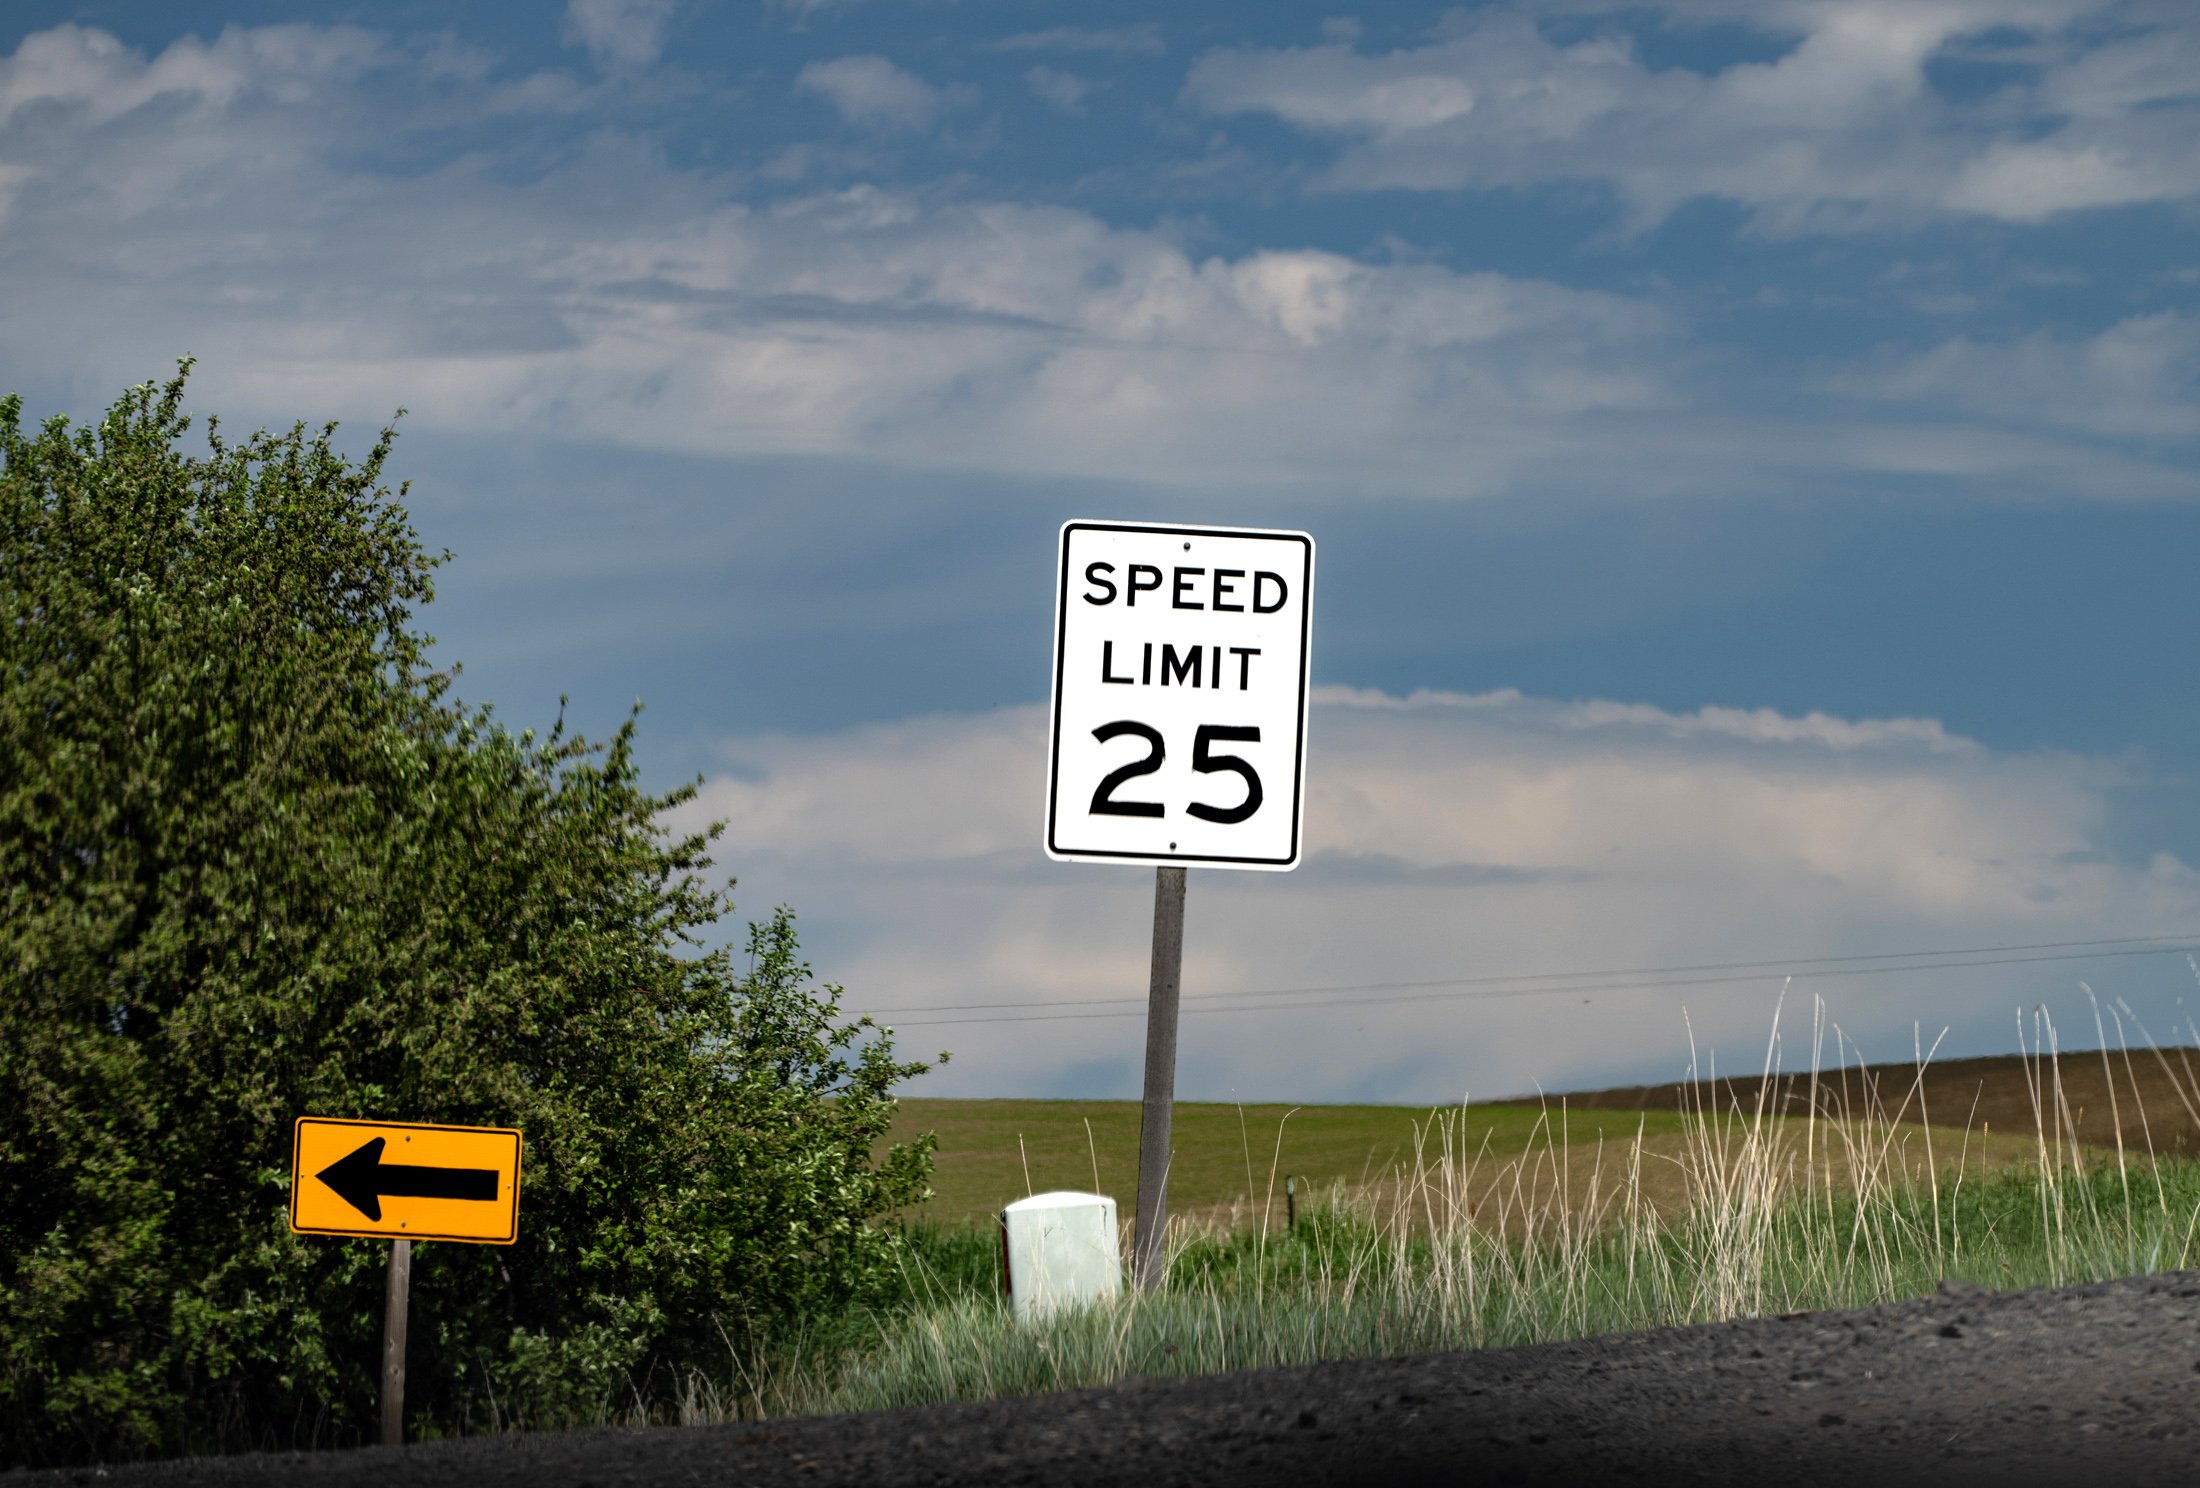 Speed limit 25 to post.jpg